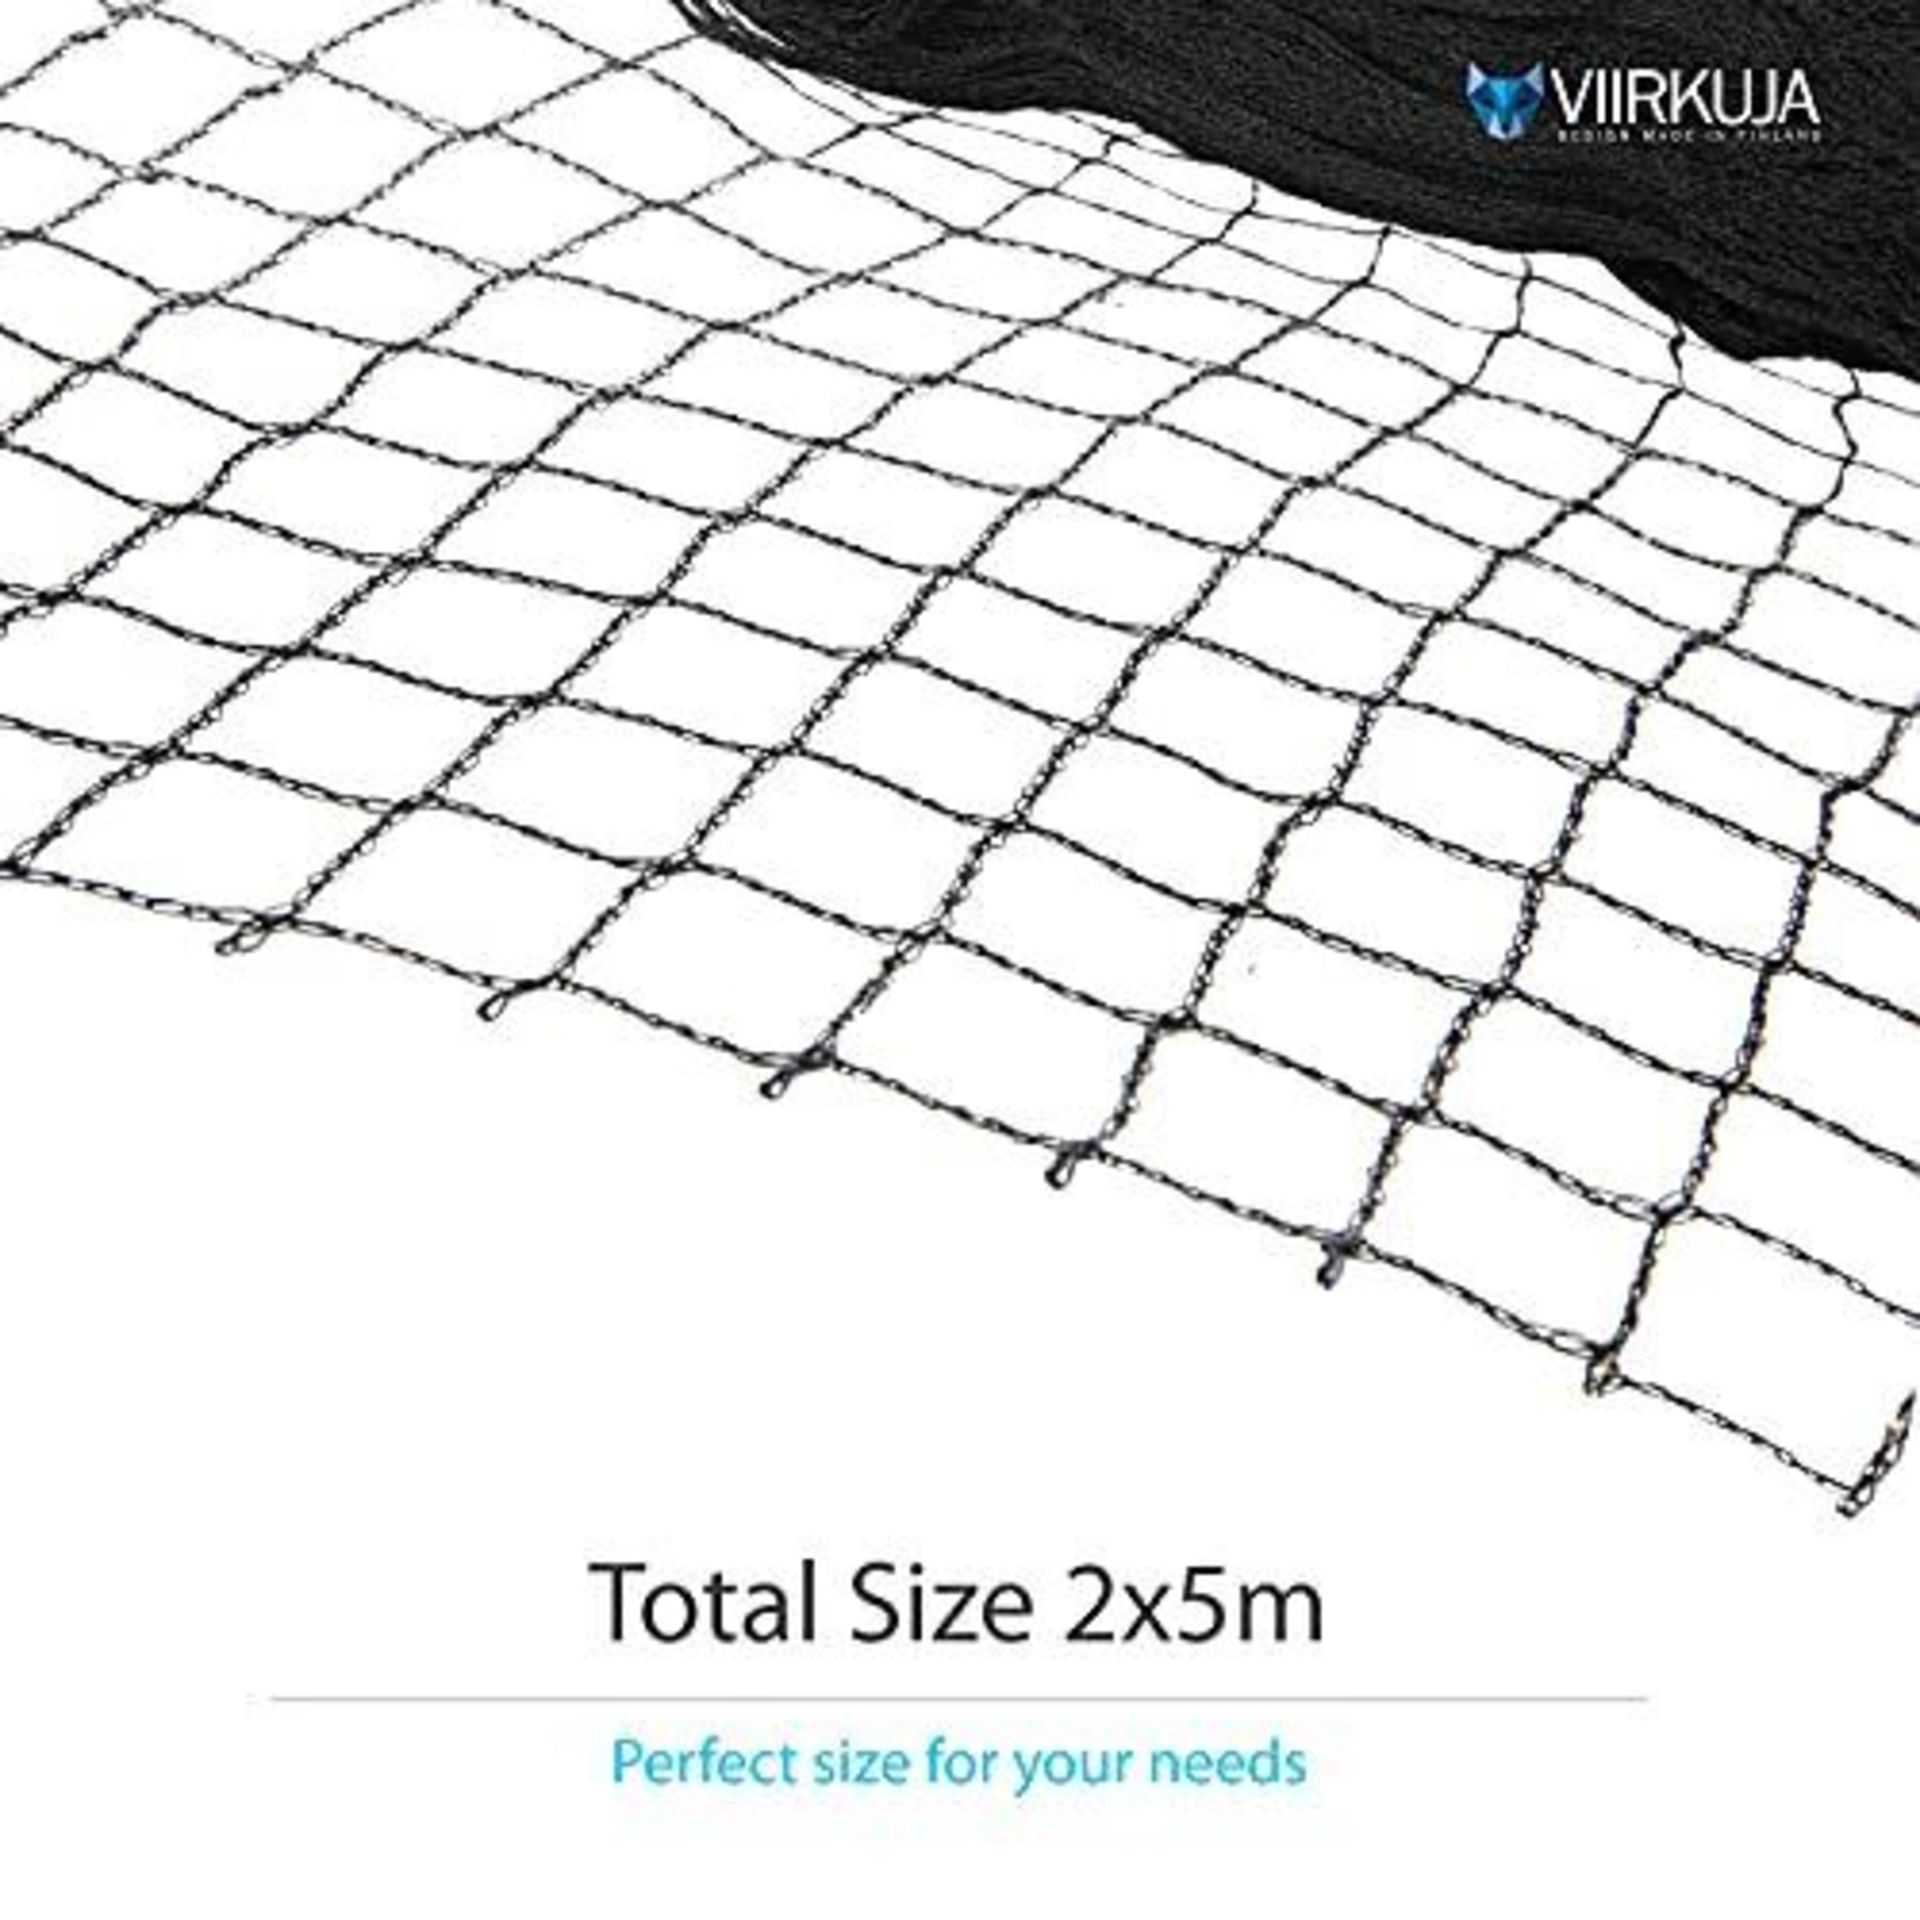 5 x Viirkuja 2x5m Fine Mesh Pond Net in Black - RRP Â£100+ ! - Image 7 of 9